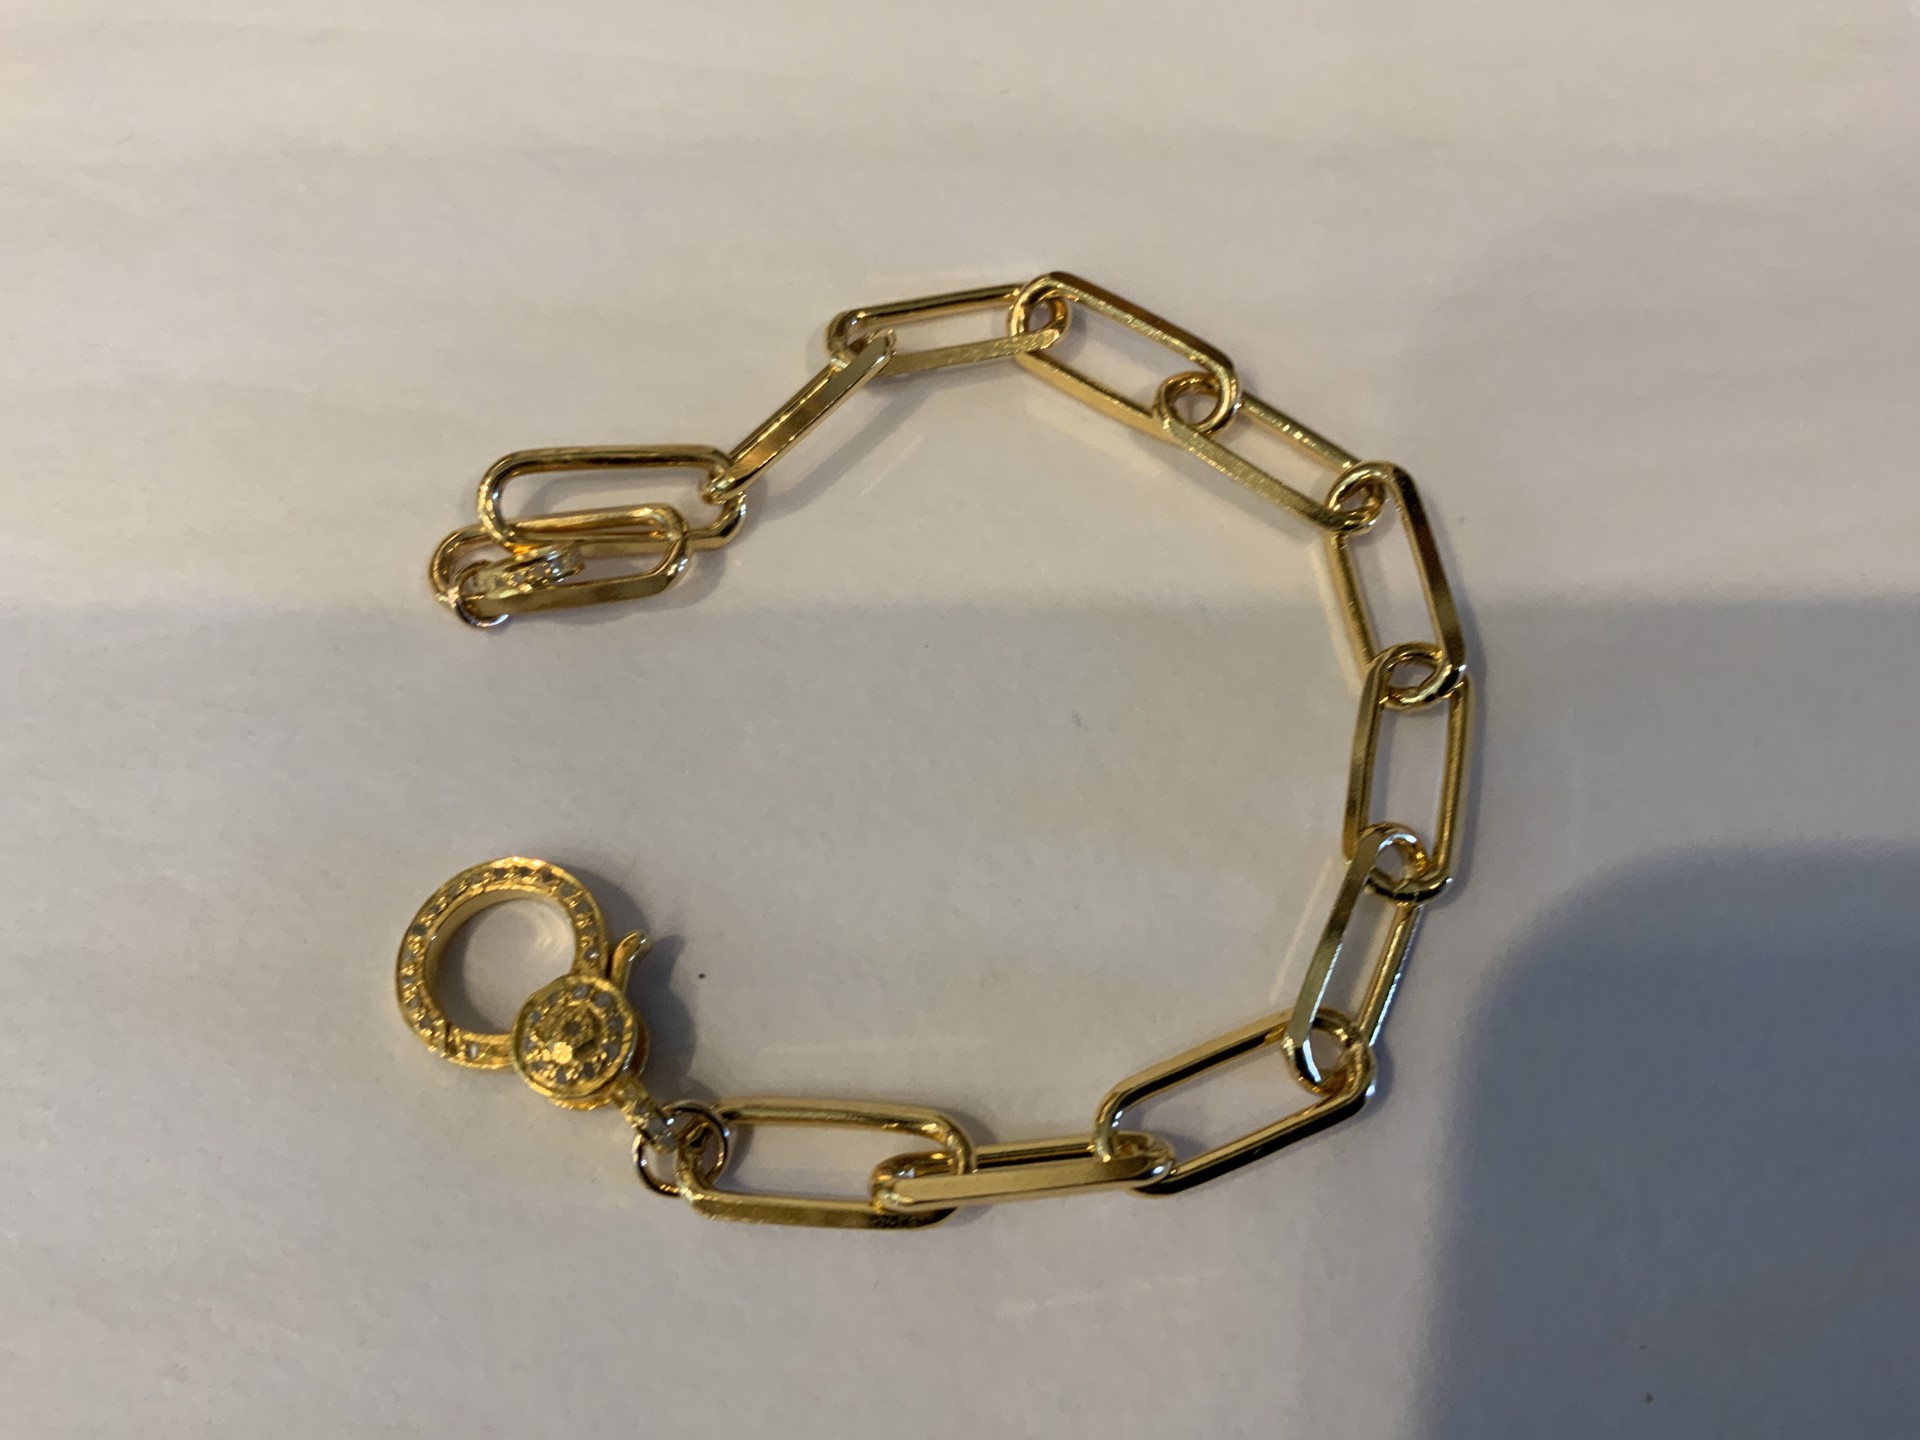 Gold Vermeil and Pave Diamond Chain Bracelet by Karen Birchmier